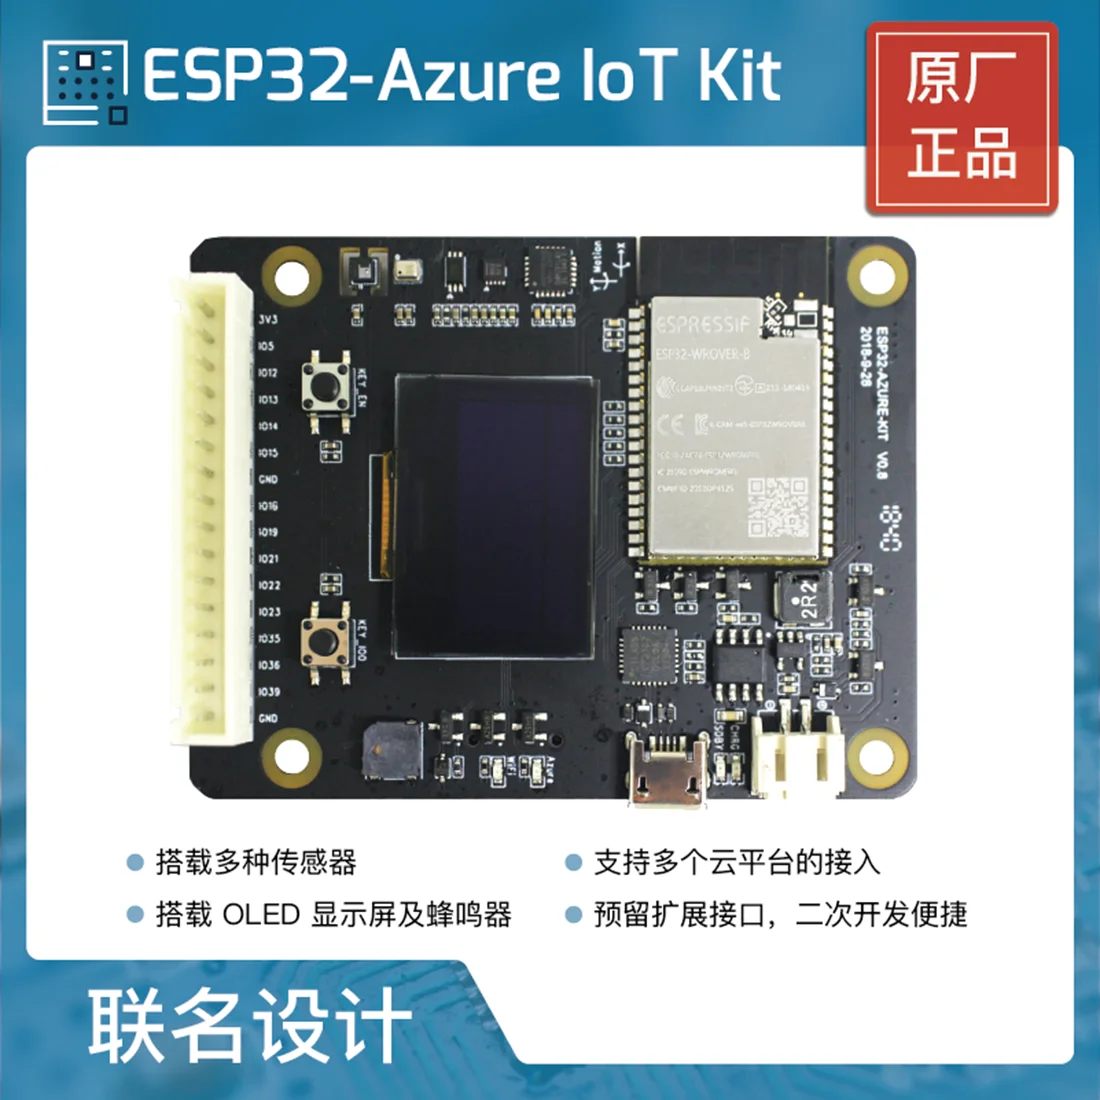 ESP32-Azure IoT Kit Wi-Fi и Bluetooth макетная плата Espressif ESP32